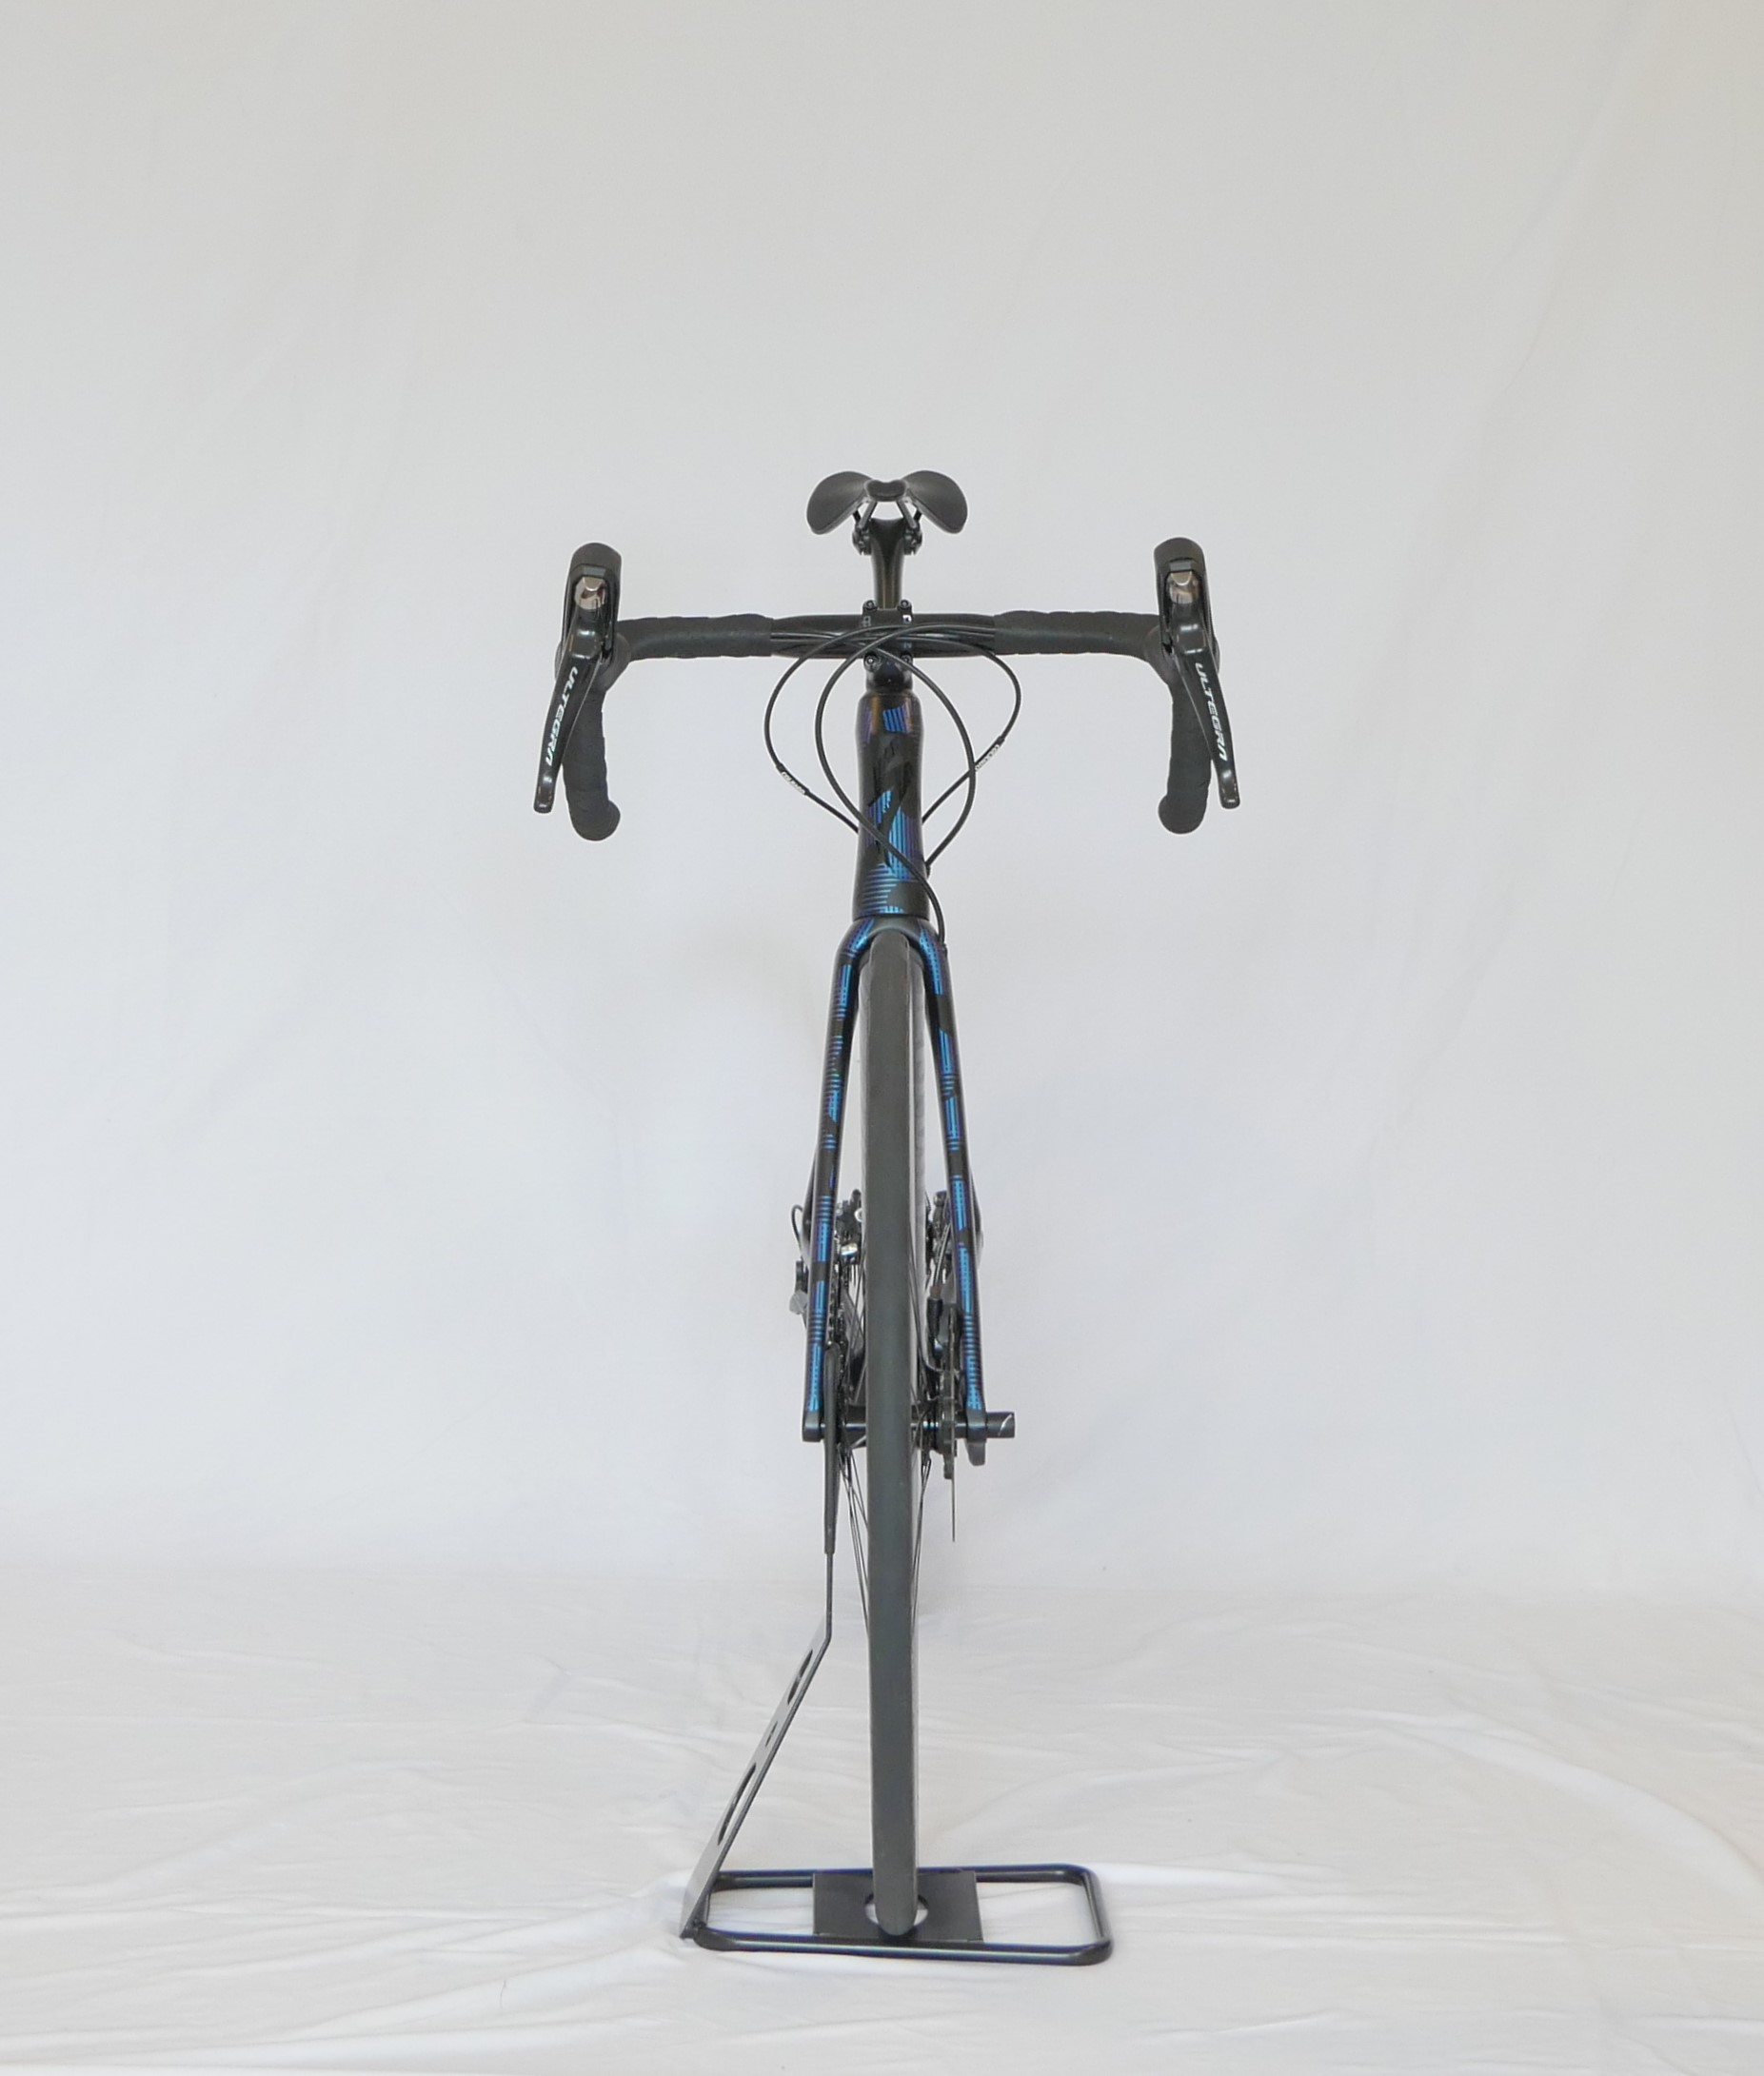 Road Bike Specialized Tarmac SL6 Expert Shimano Ultegra Noir / Bleu